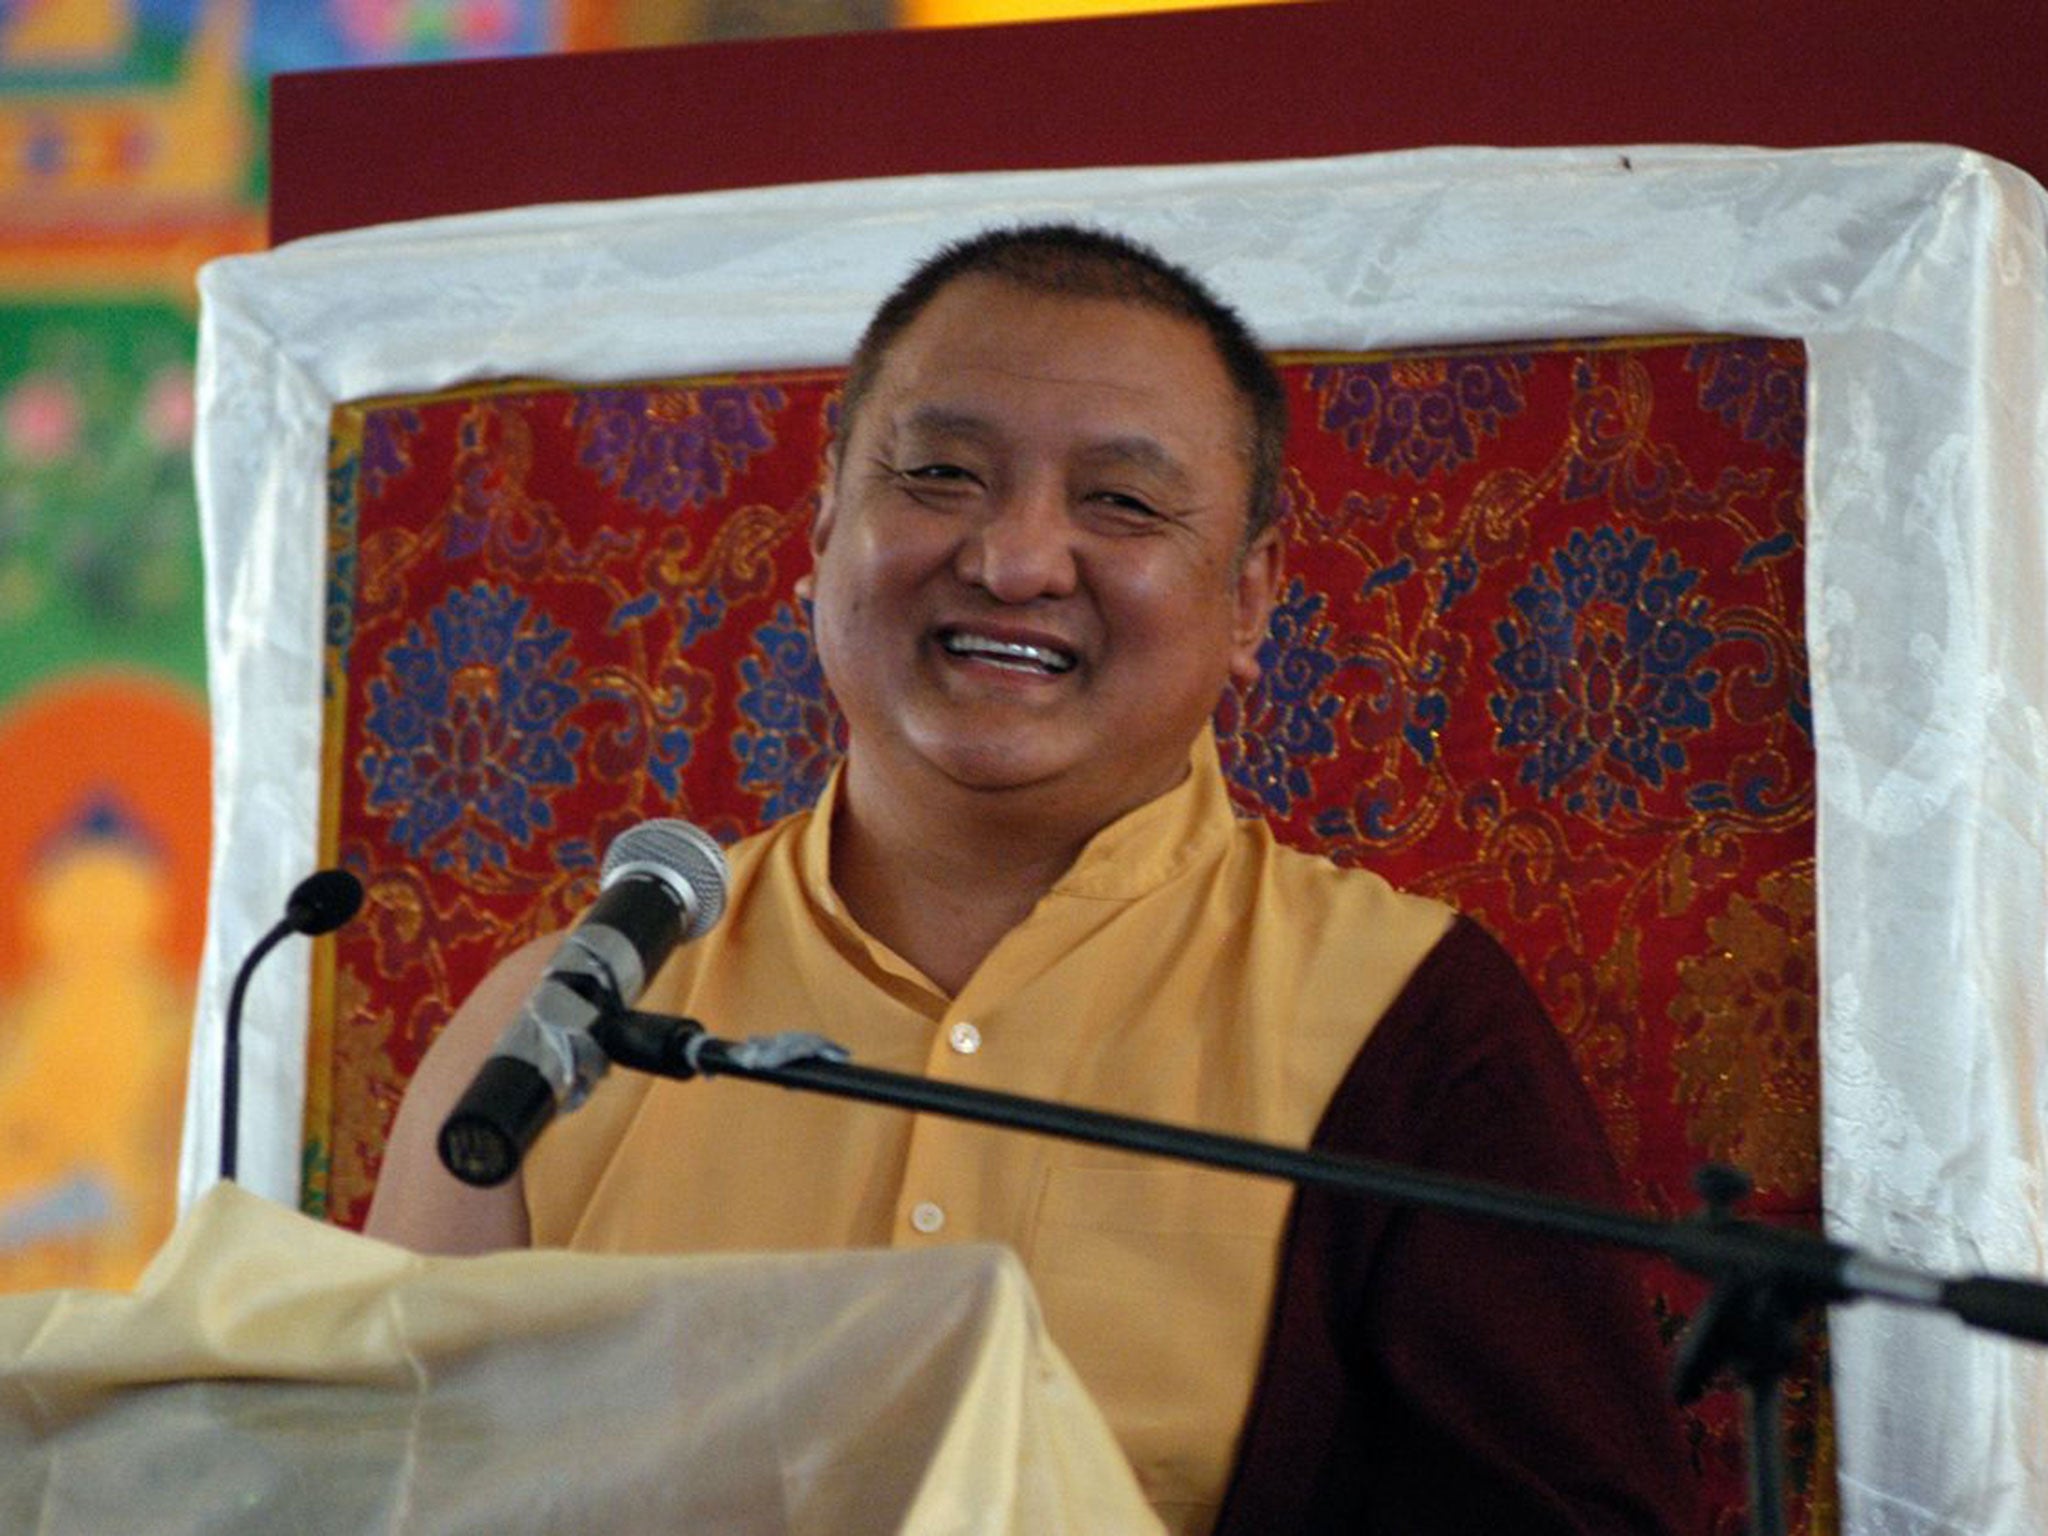 Shamar Rinpoche’s body has yet to be repatriated